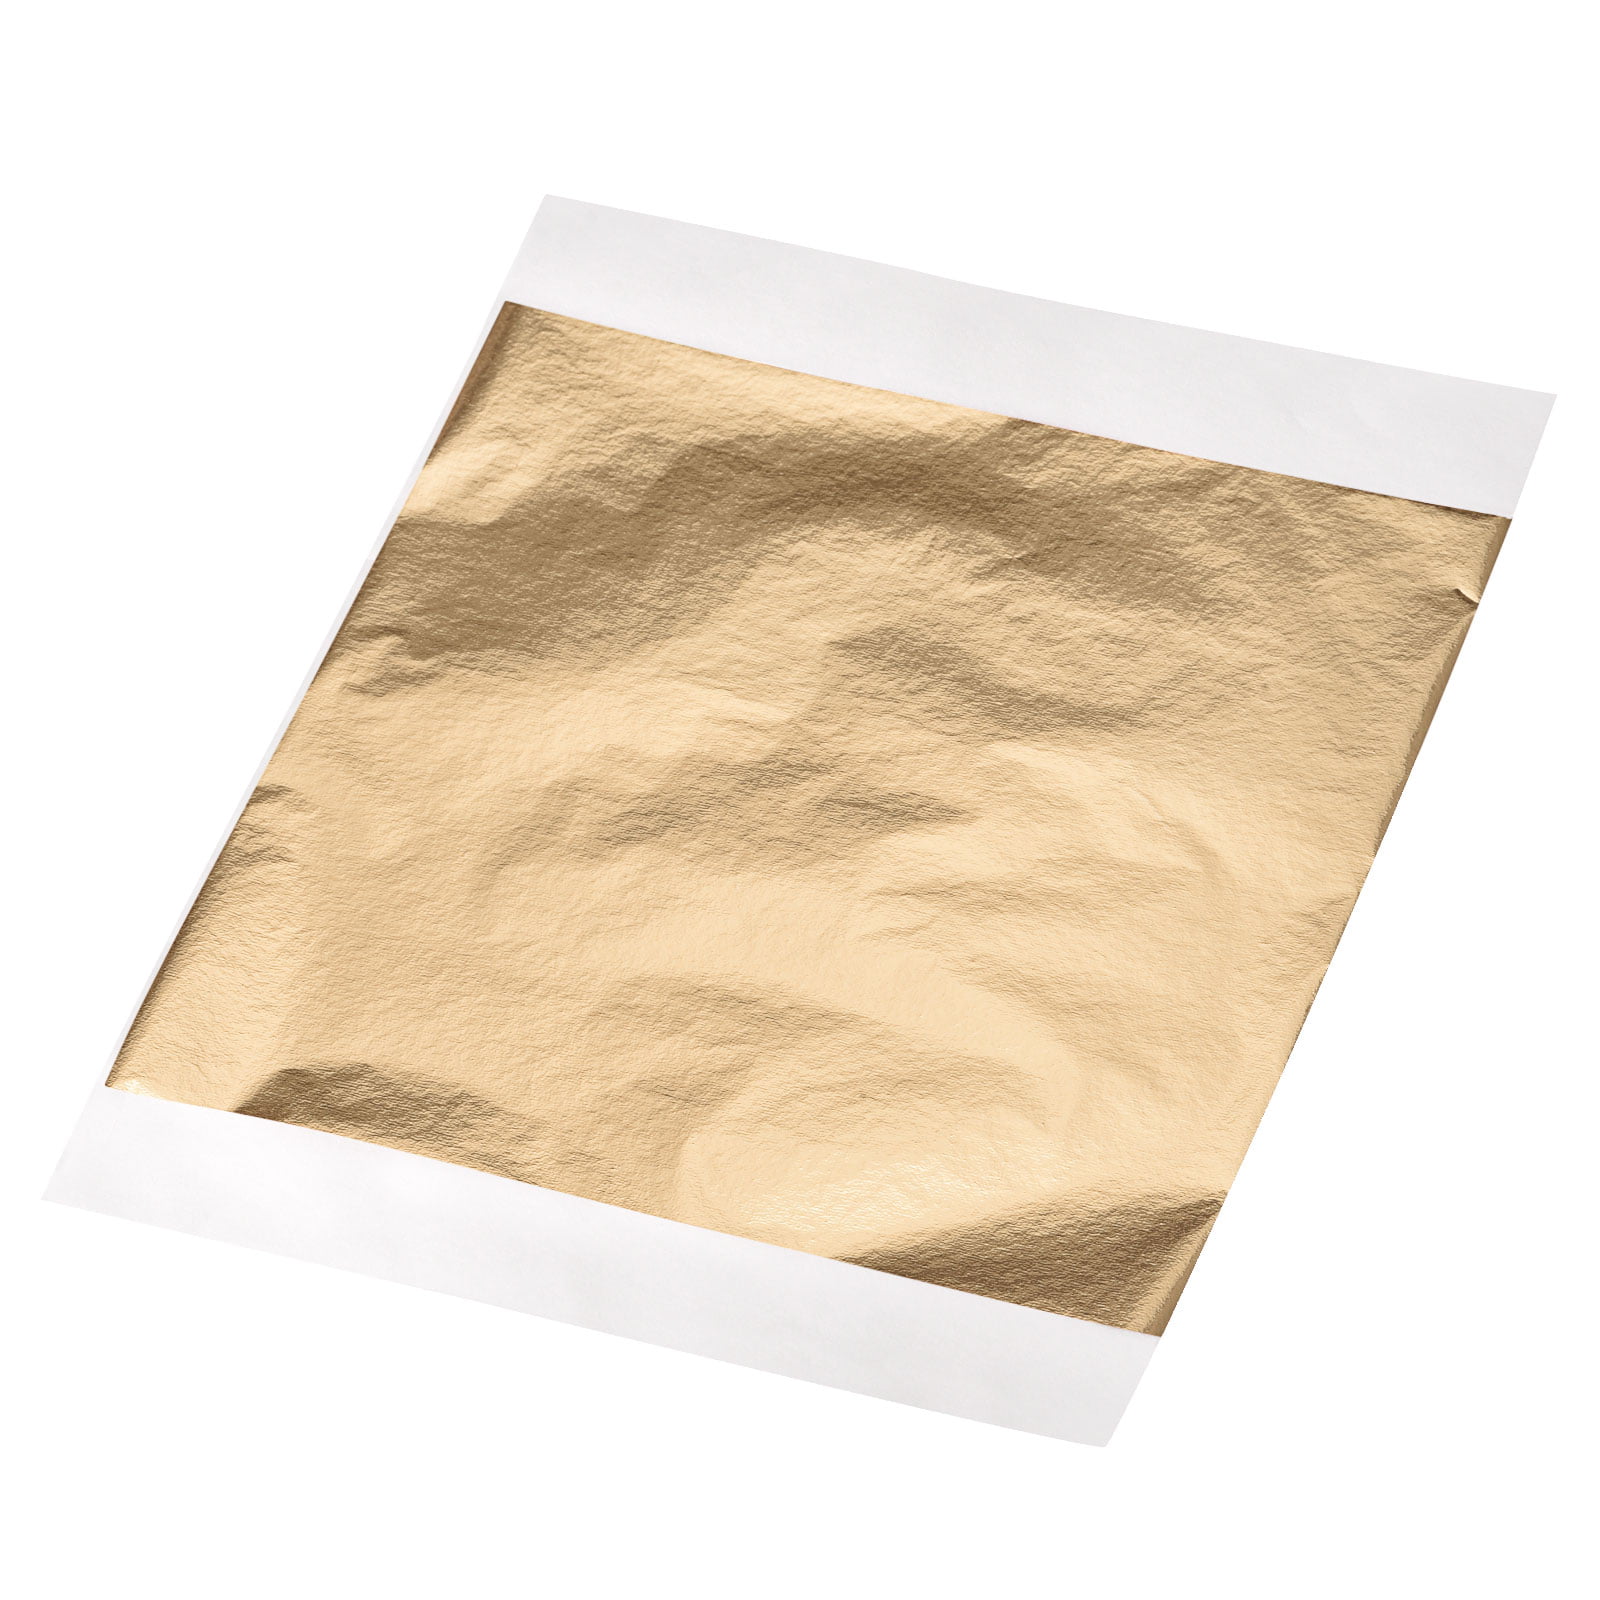 Gold Leaf Foil Sheet Champagne Gold Leaf Paper 3.3 x 3.1inch for Art  Decoration, Sculpture, Painting, Pack of 100 